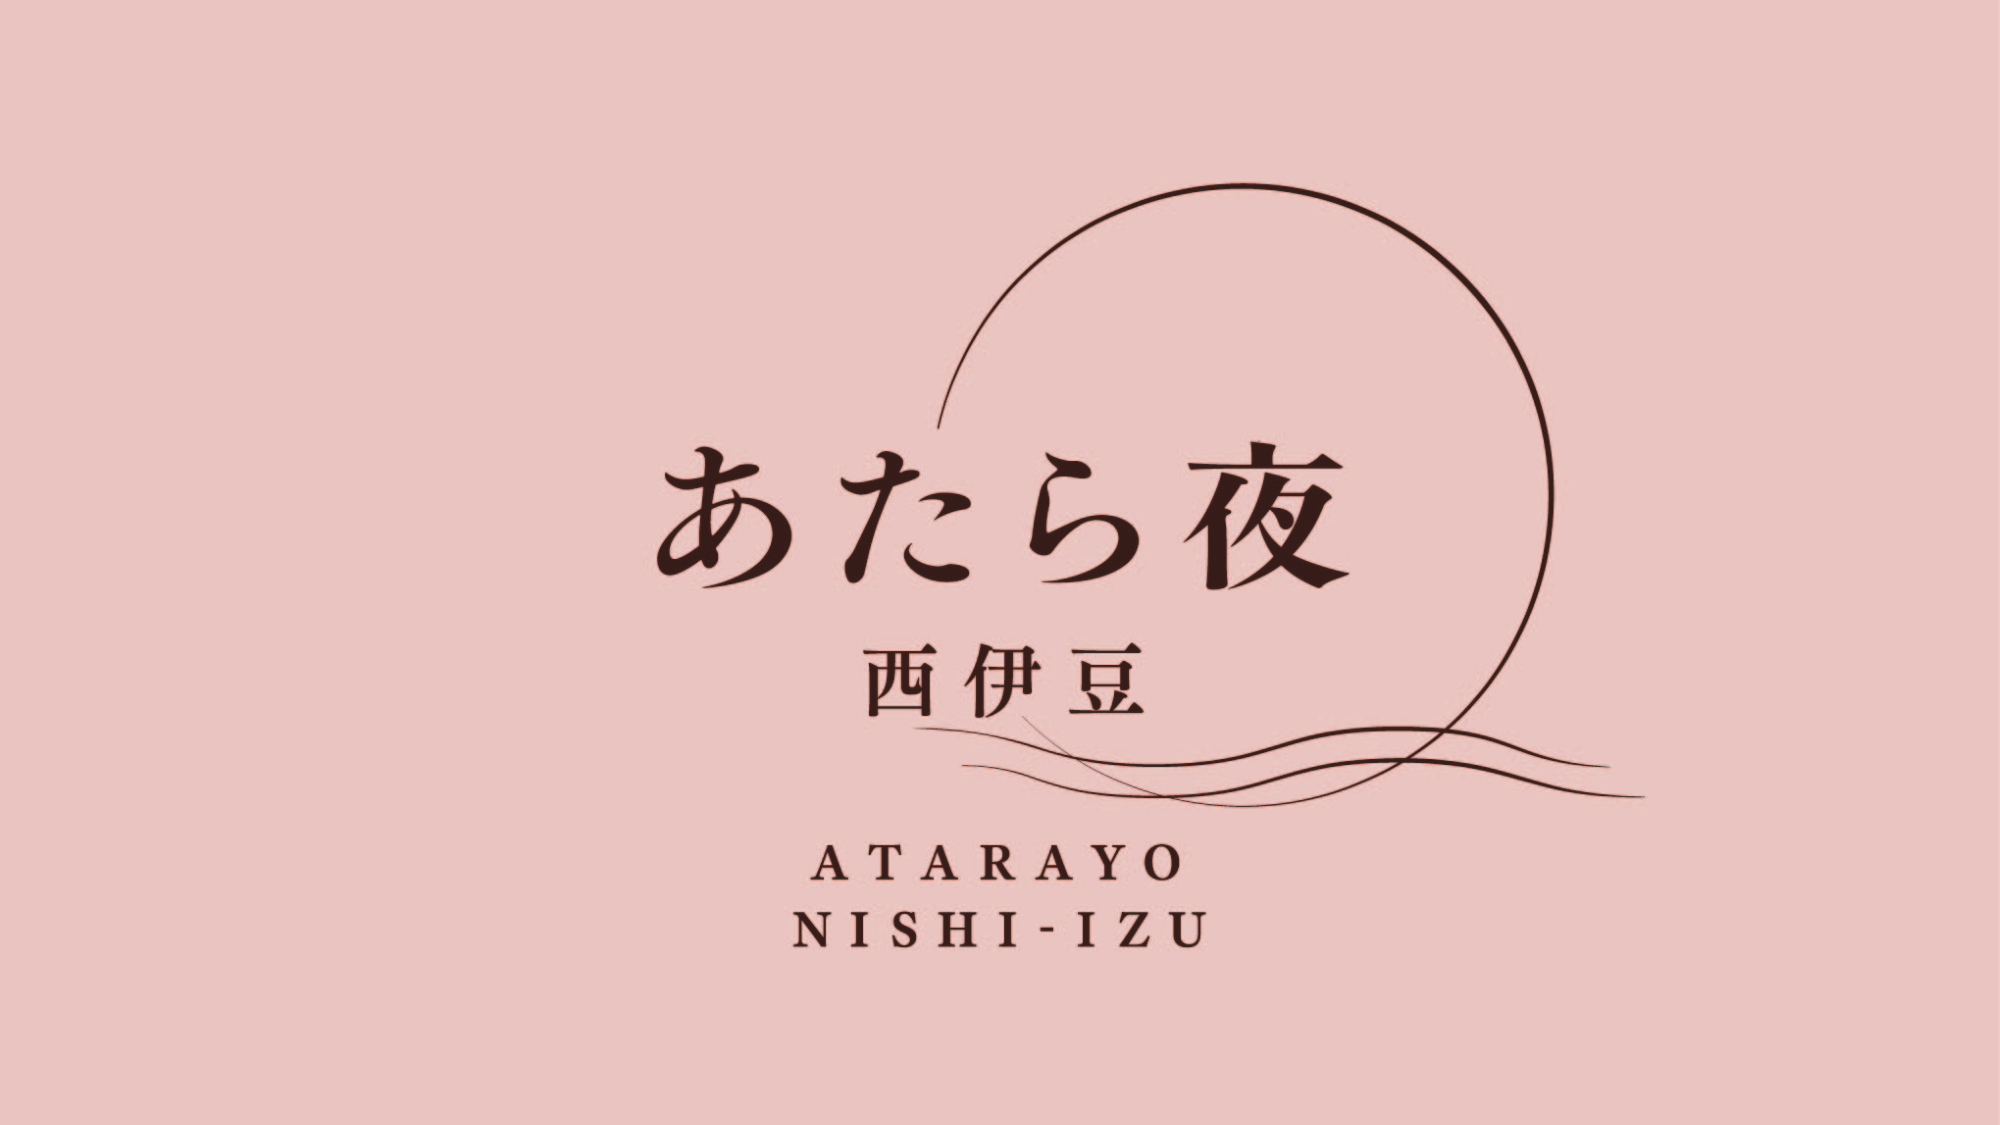 西伊豆 Atarayo